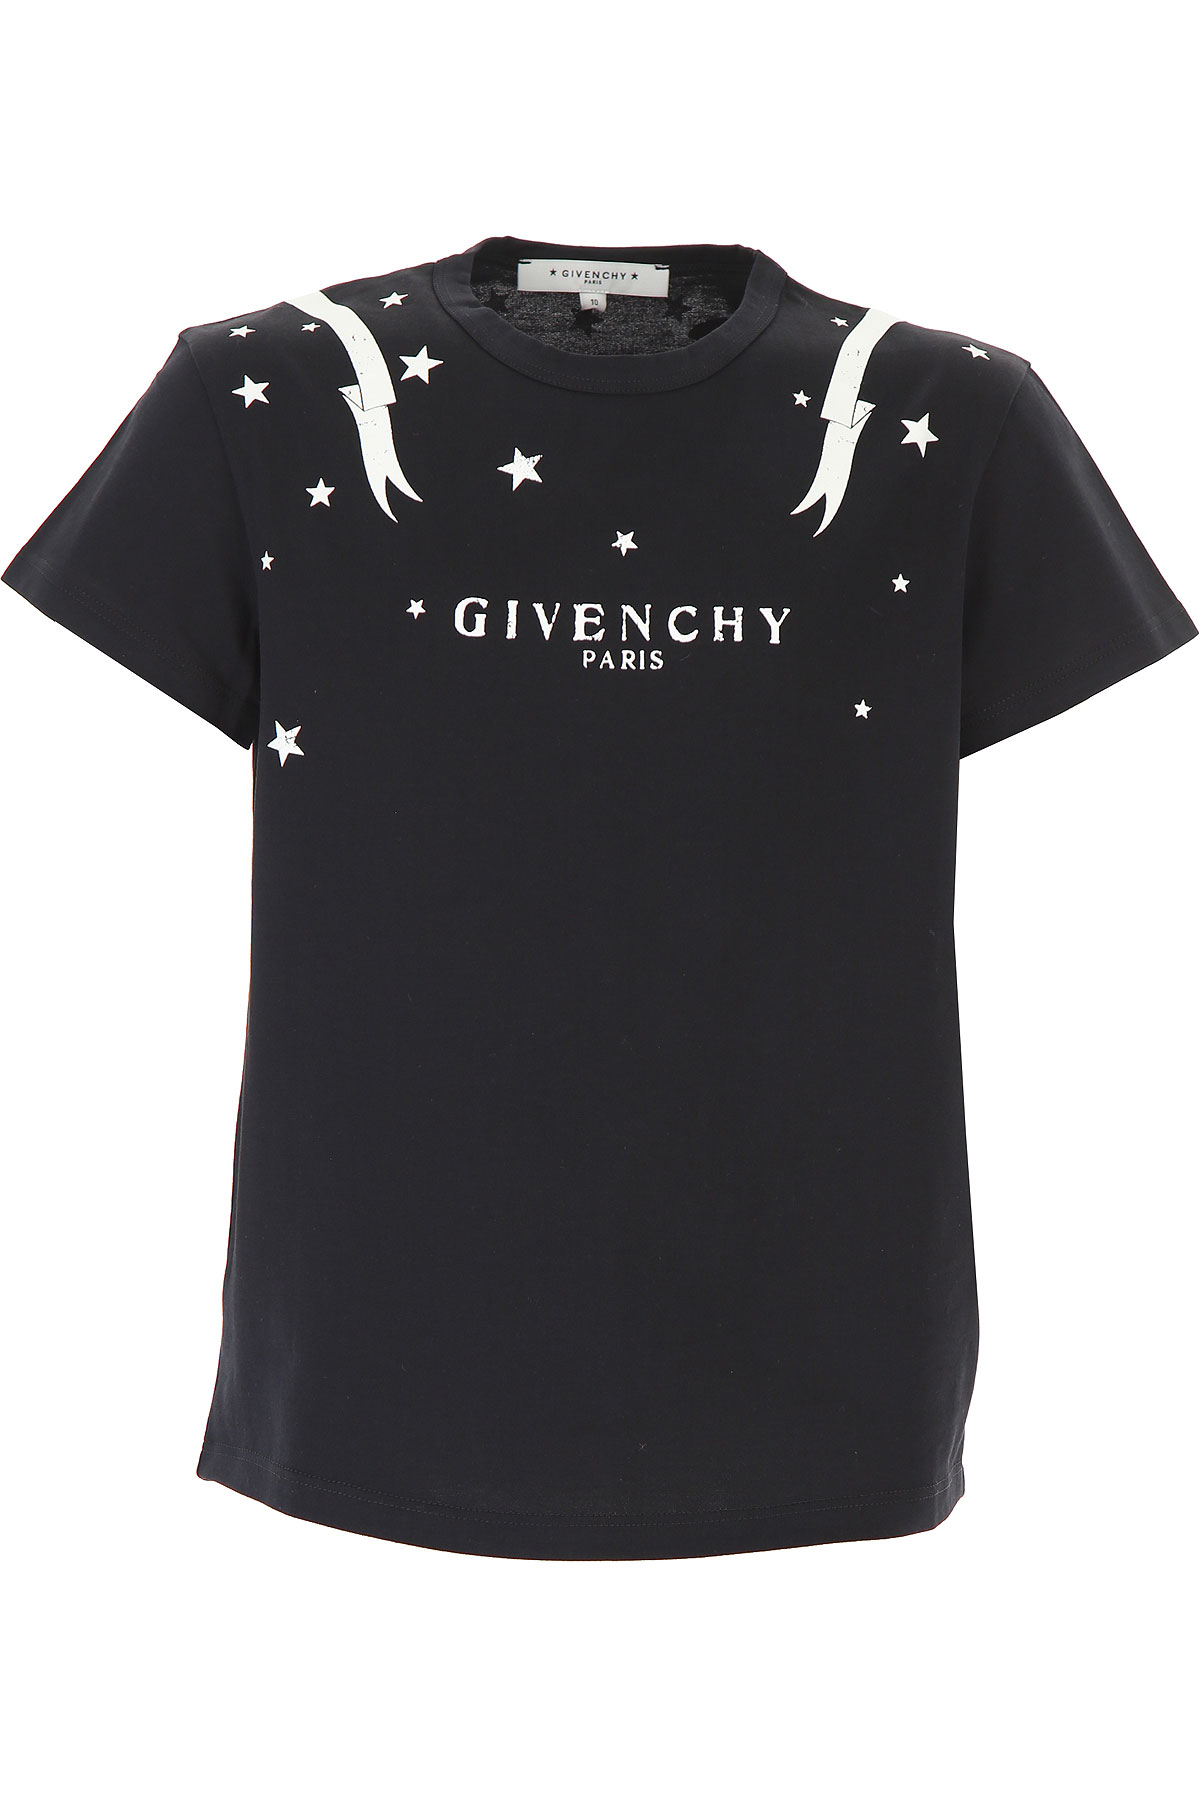 Givenchy Kinder T-Shirt für Mädchen Günstig im Sale, Schwarz, Baumwolle, 2017, 10Y 12Y 4Y 6Y 8Y